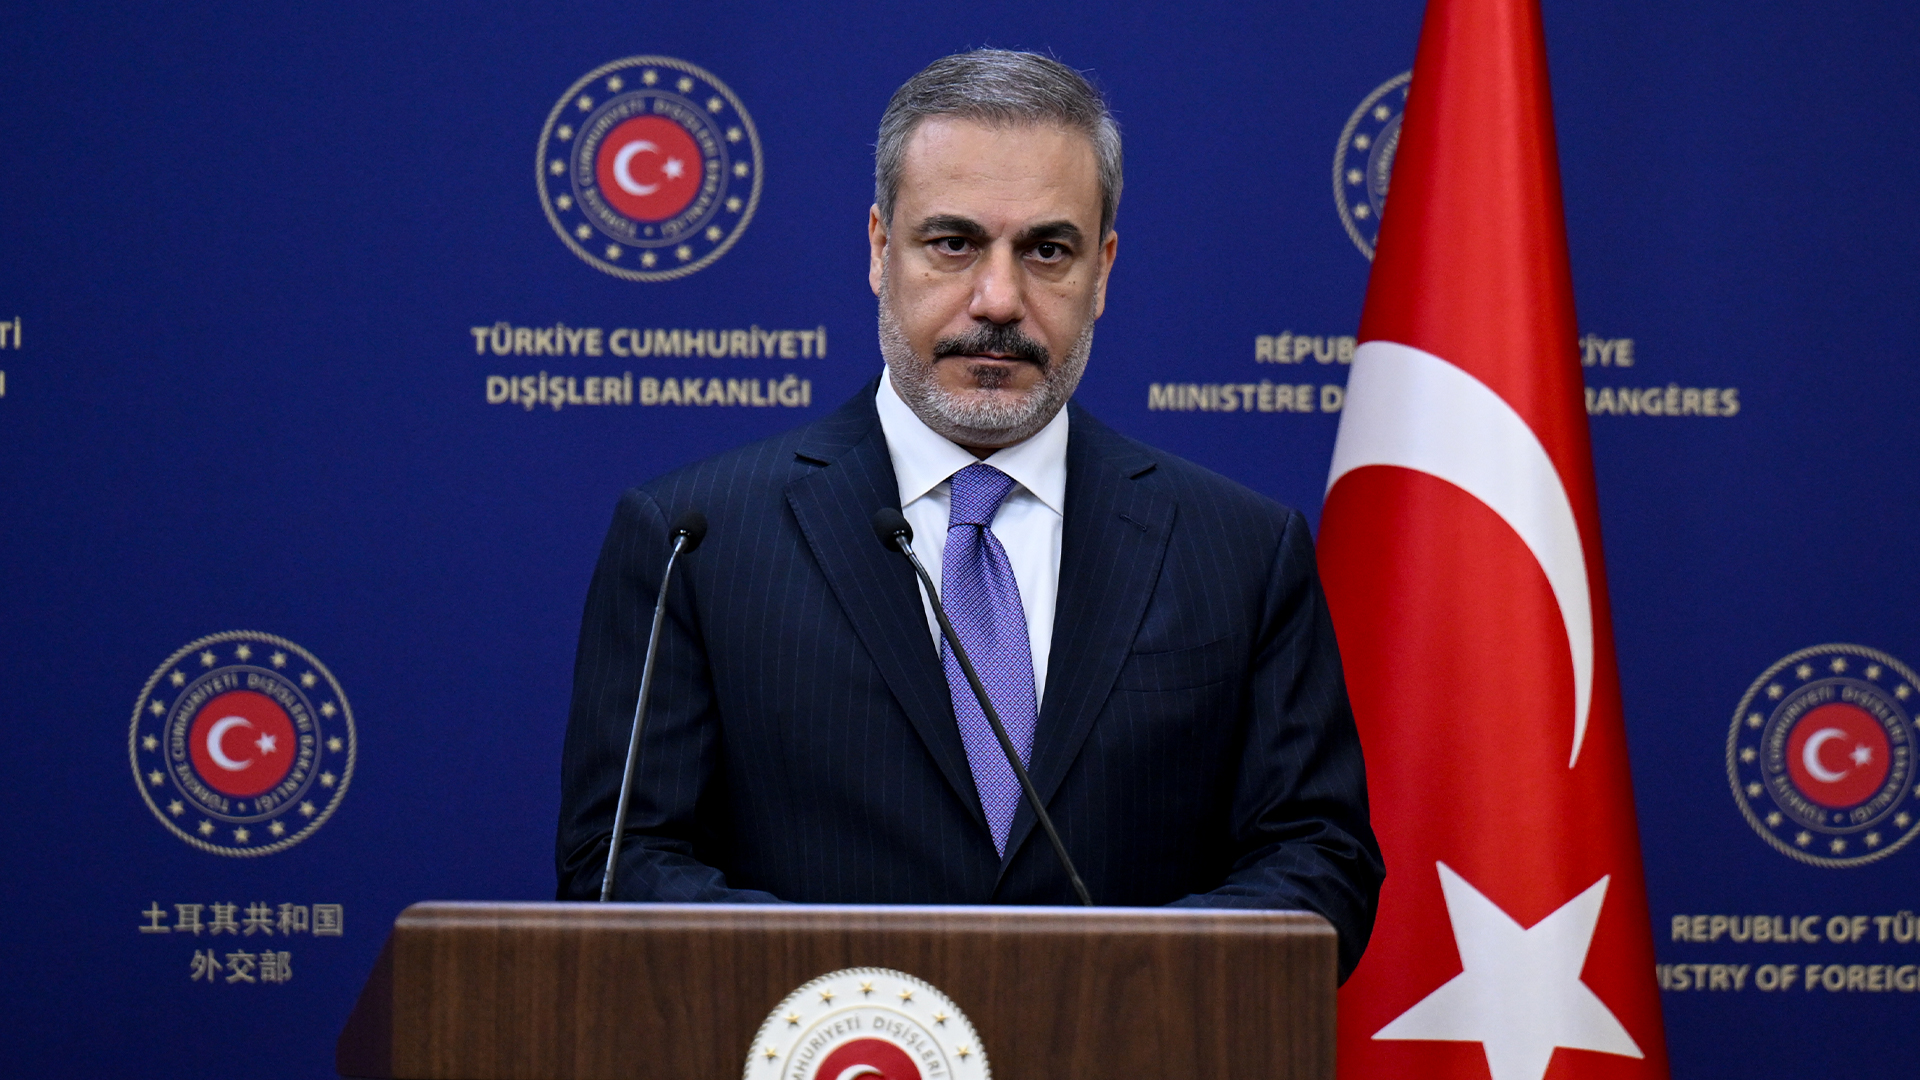 Turkish FM: Why hasn't Turkey completely cut ties with Israel? | Talk to Al Jazeera